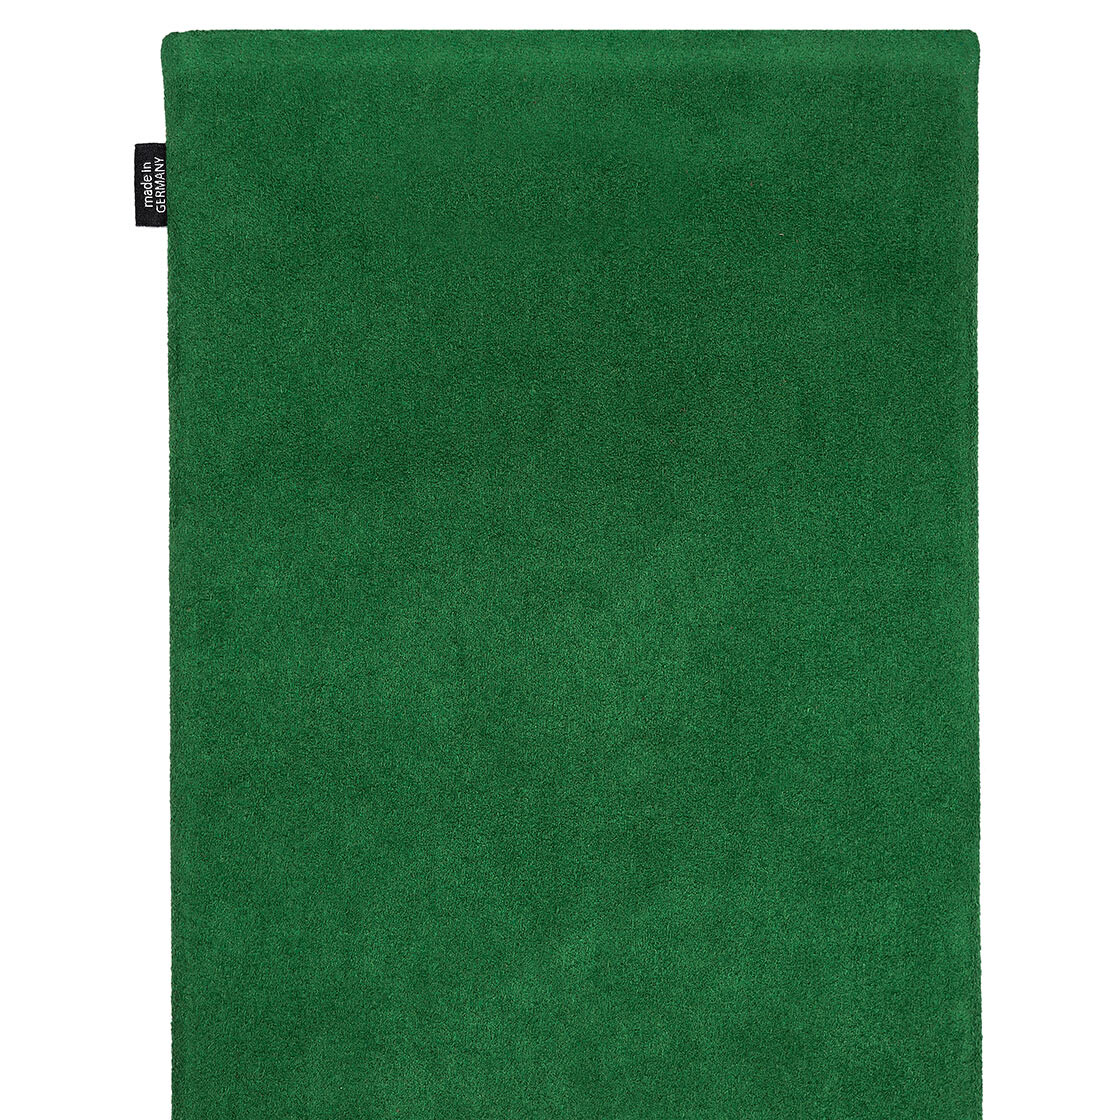 fitBAG Classic Emerald - custom tailored notebook sleeve, 59,90